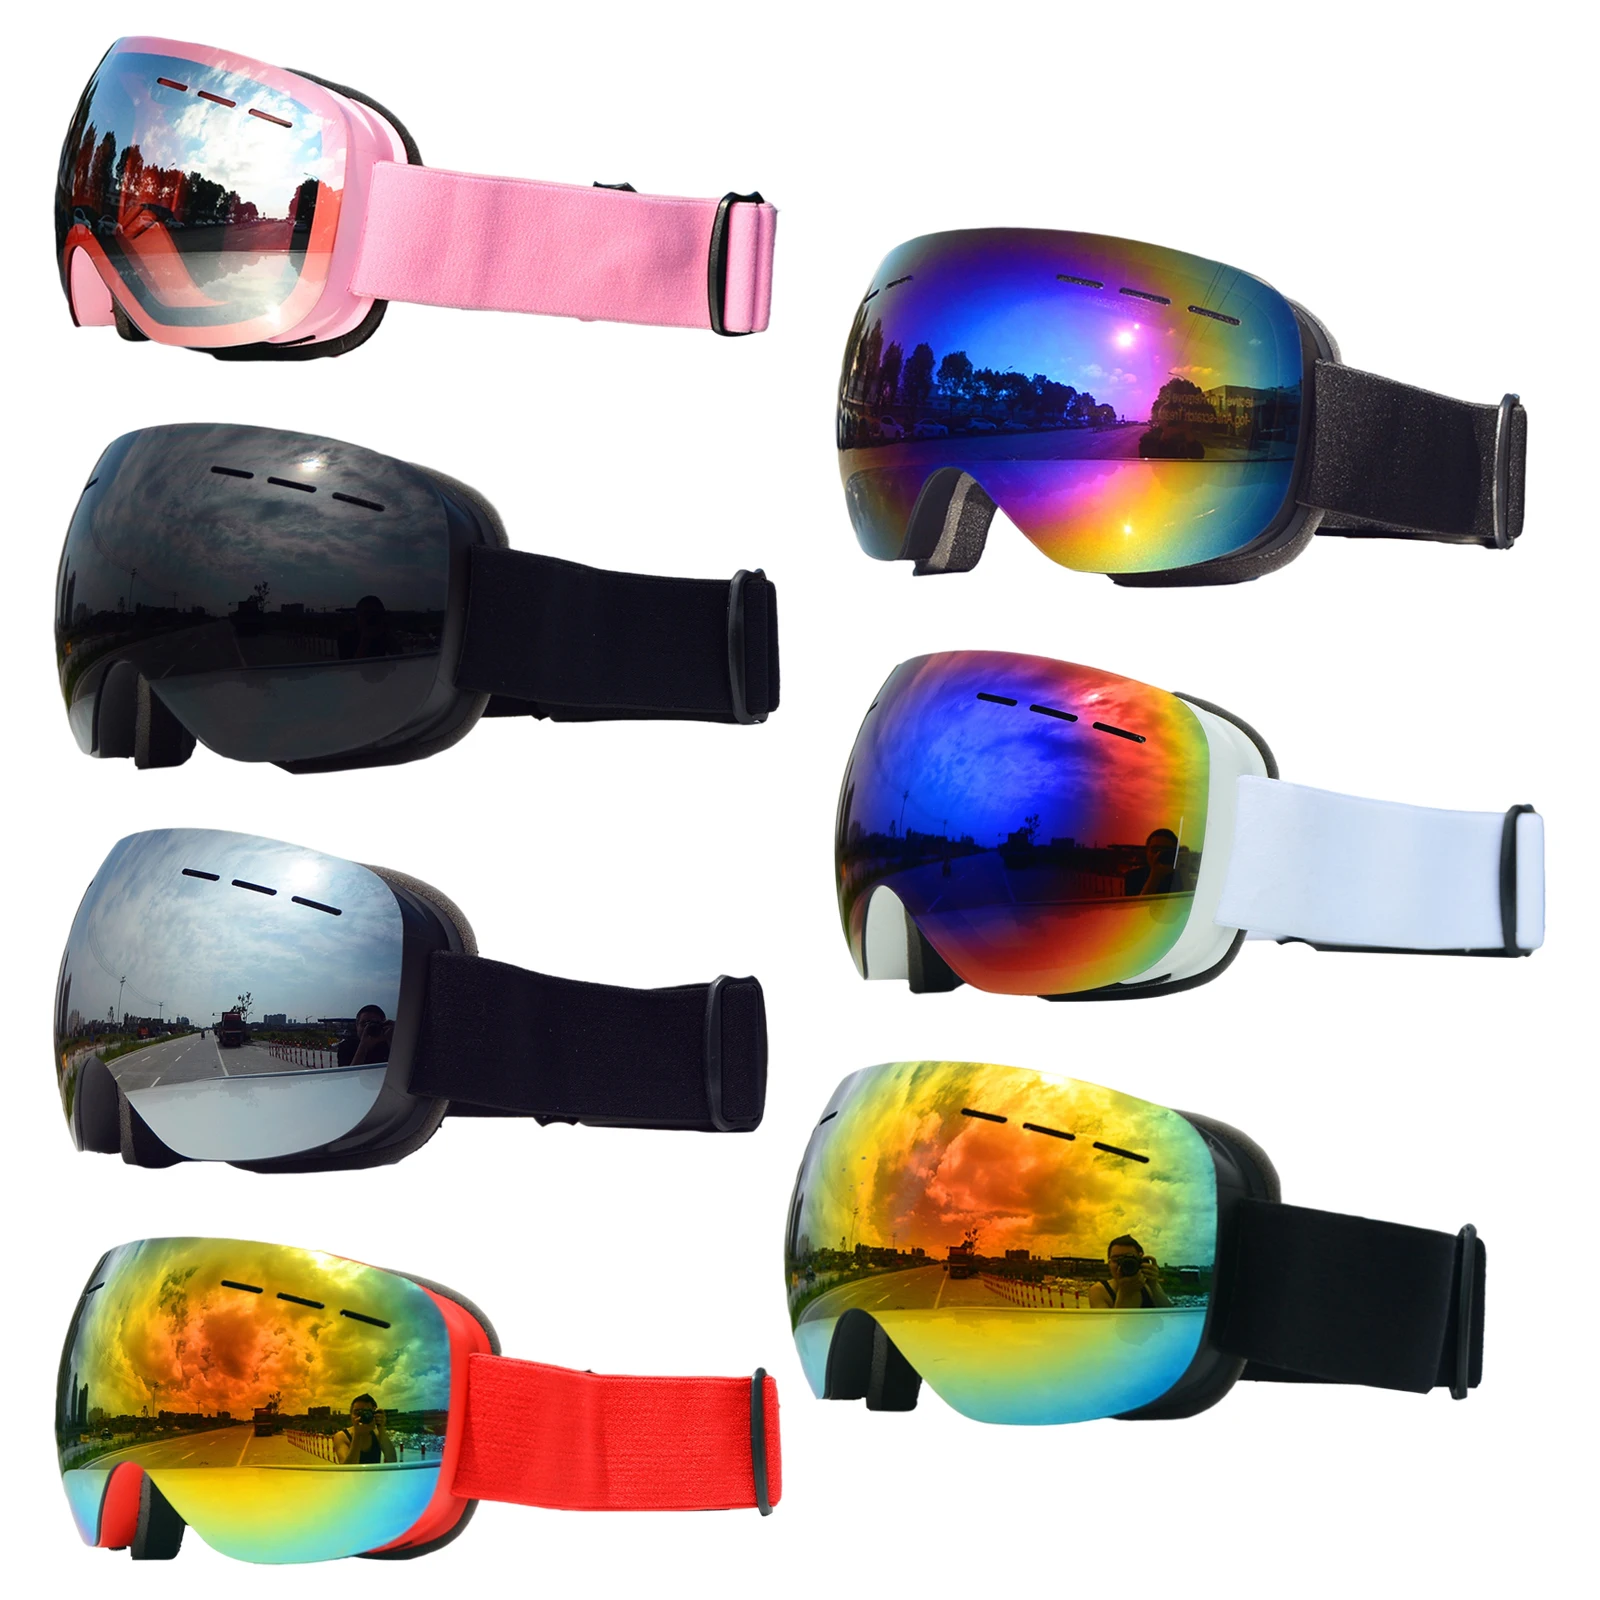 Ski Goggles Magnetic Protective Anti Fog Snow UV Protection Detachable ATV Glasses for Skating Dirt Bike Sports Girls Boys